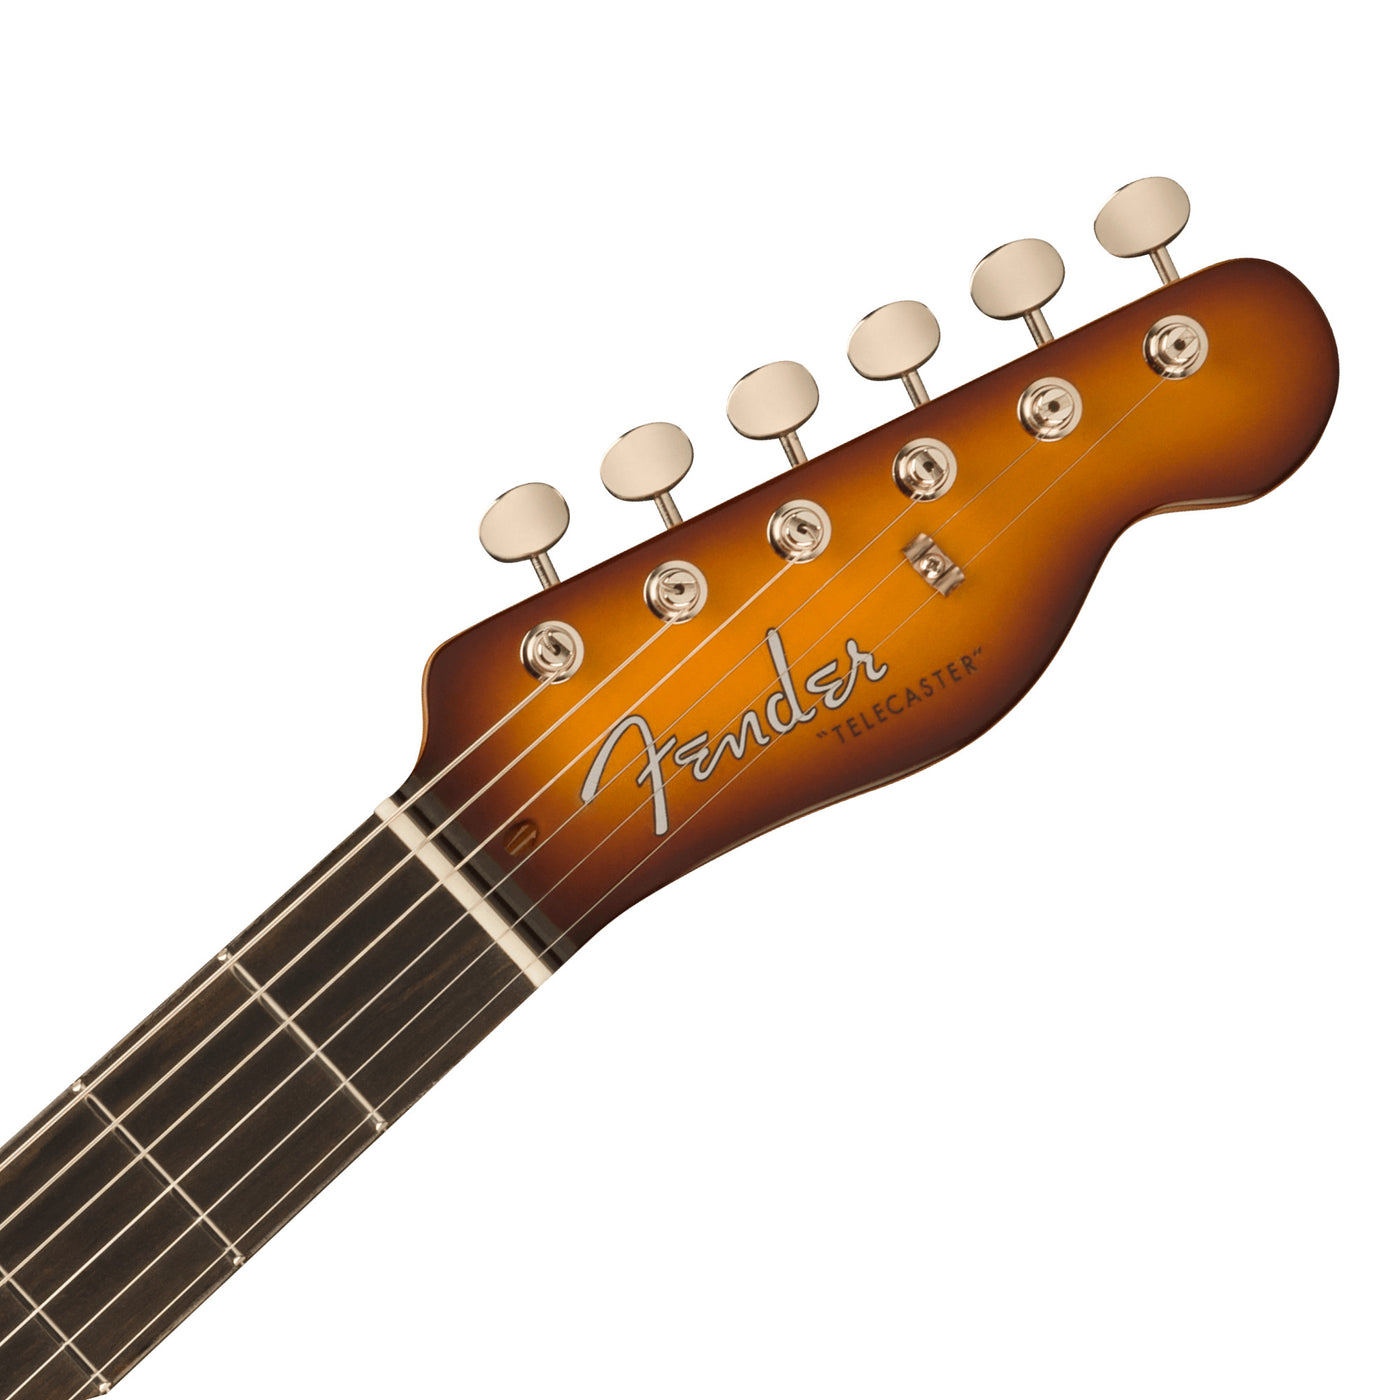 Fender Limited Edition Suona Telecaster Thinline Electric Guitar, Violin Burst (0170281830)